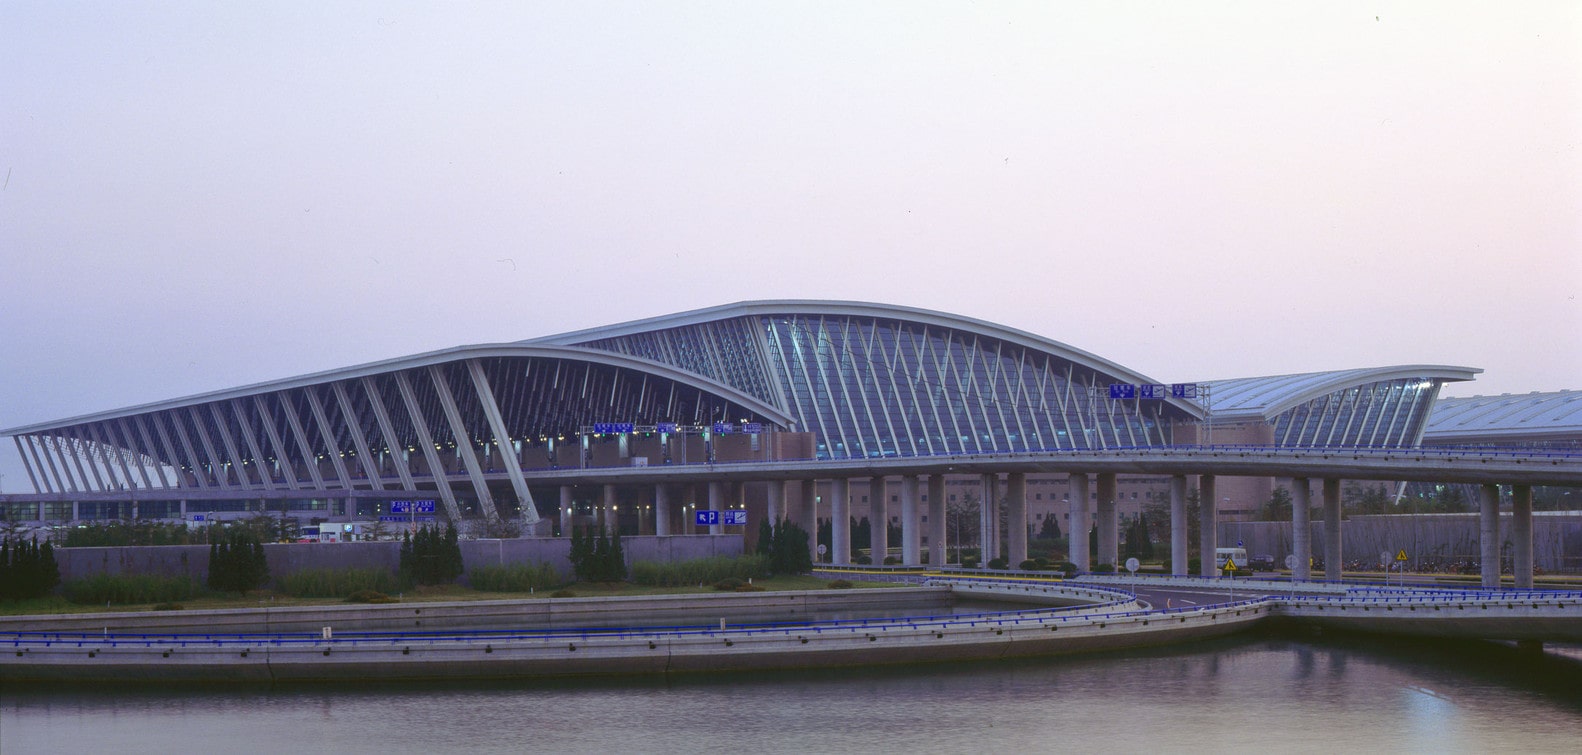 Shanghai Pudong airport